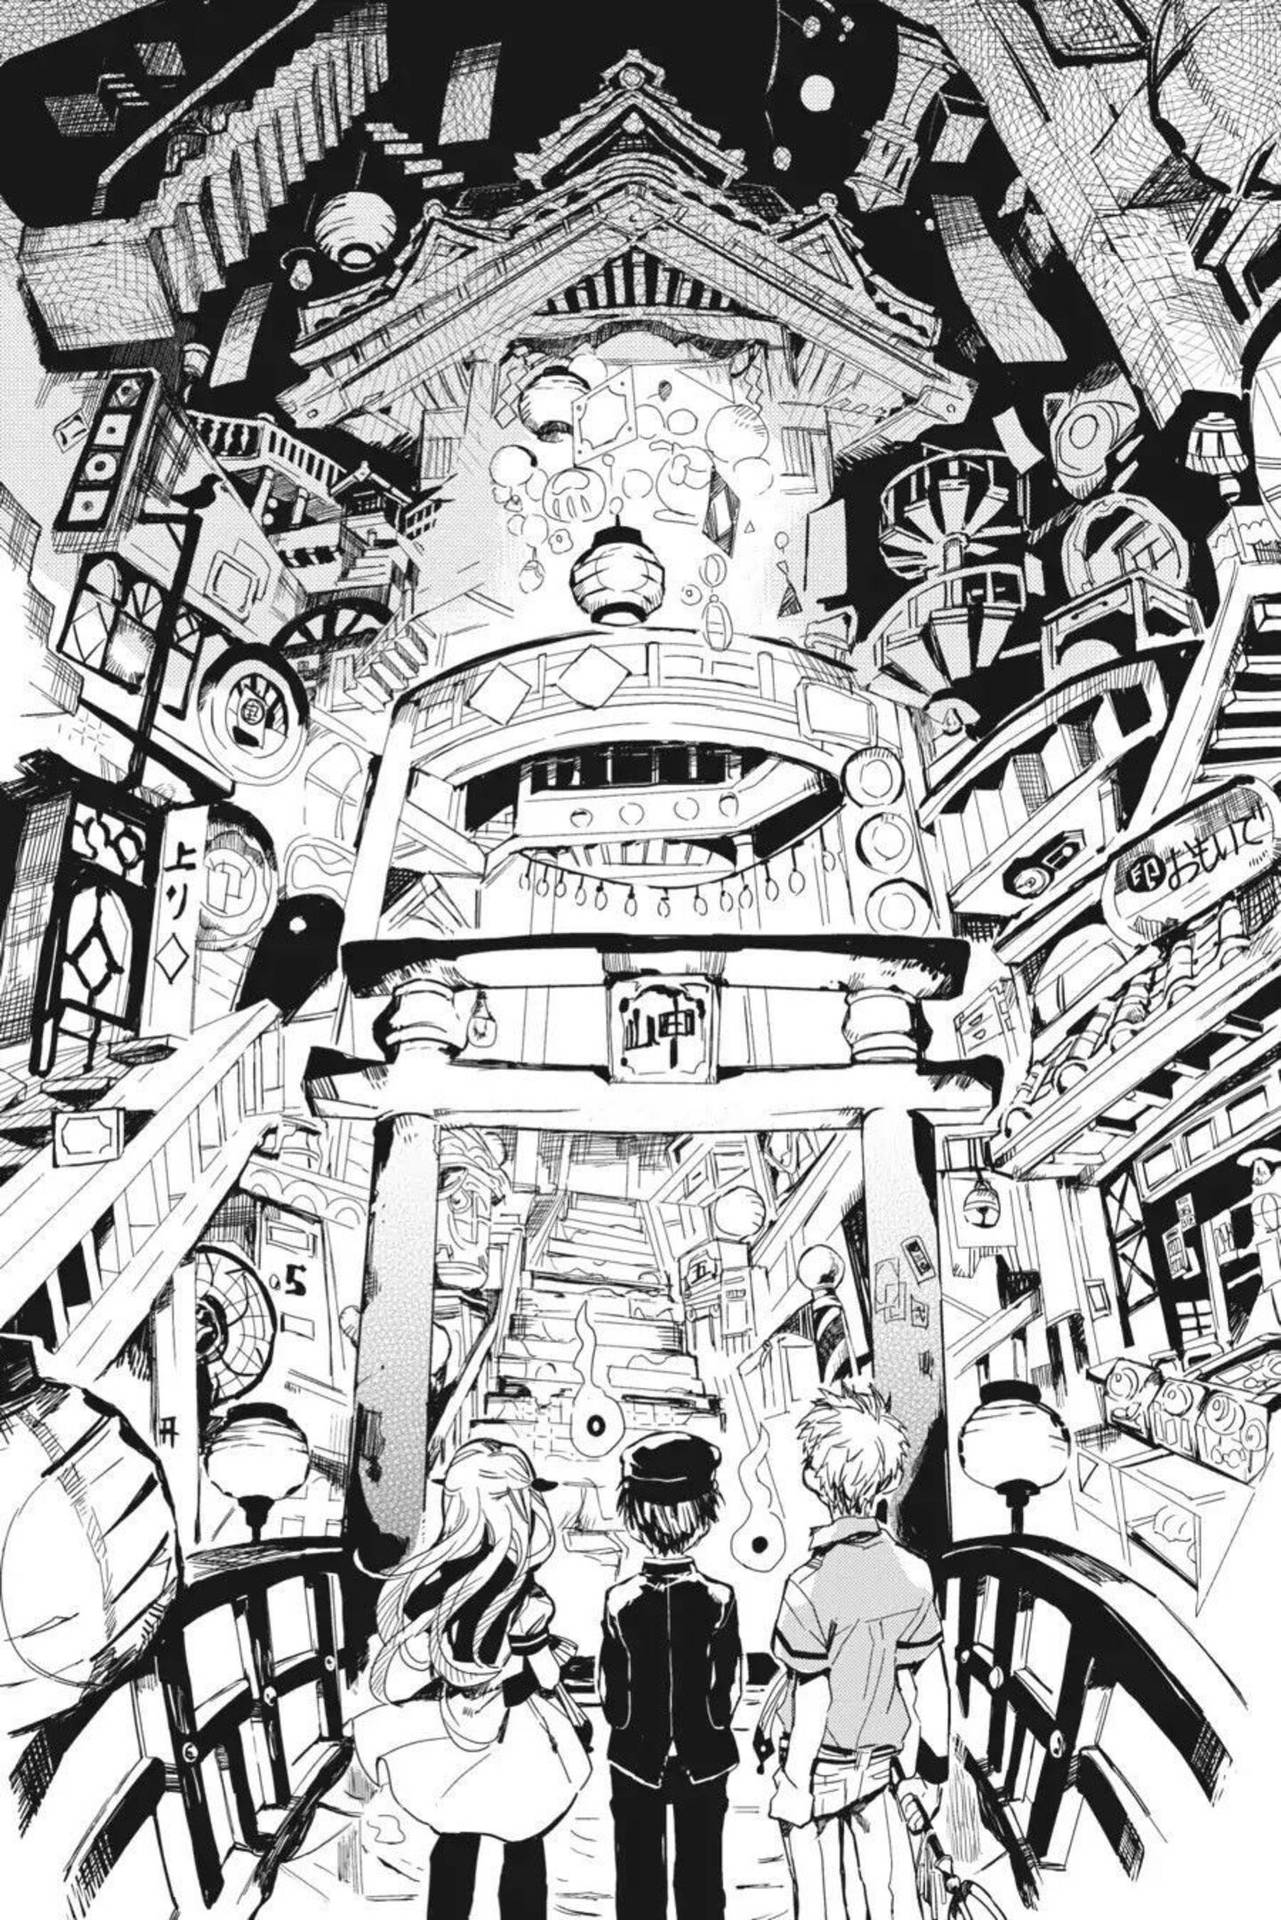 Manga 1440X2159 Wallpaper and Background Image